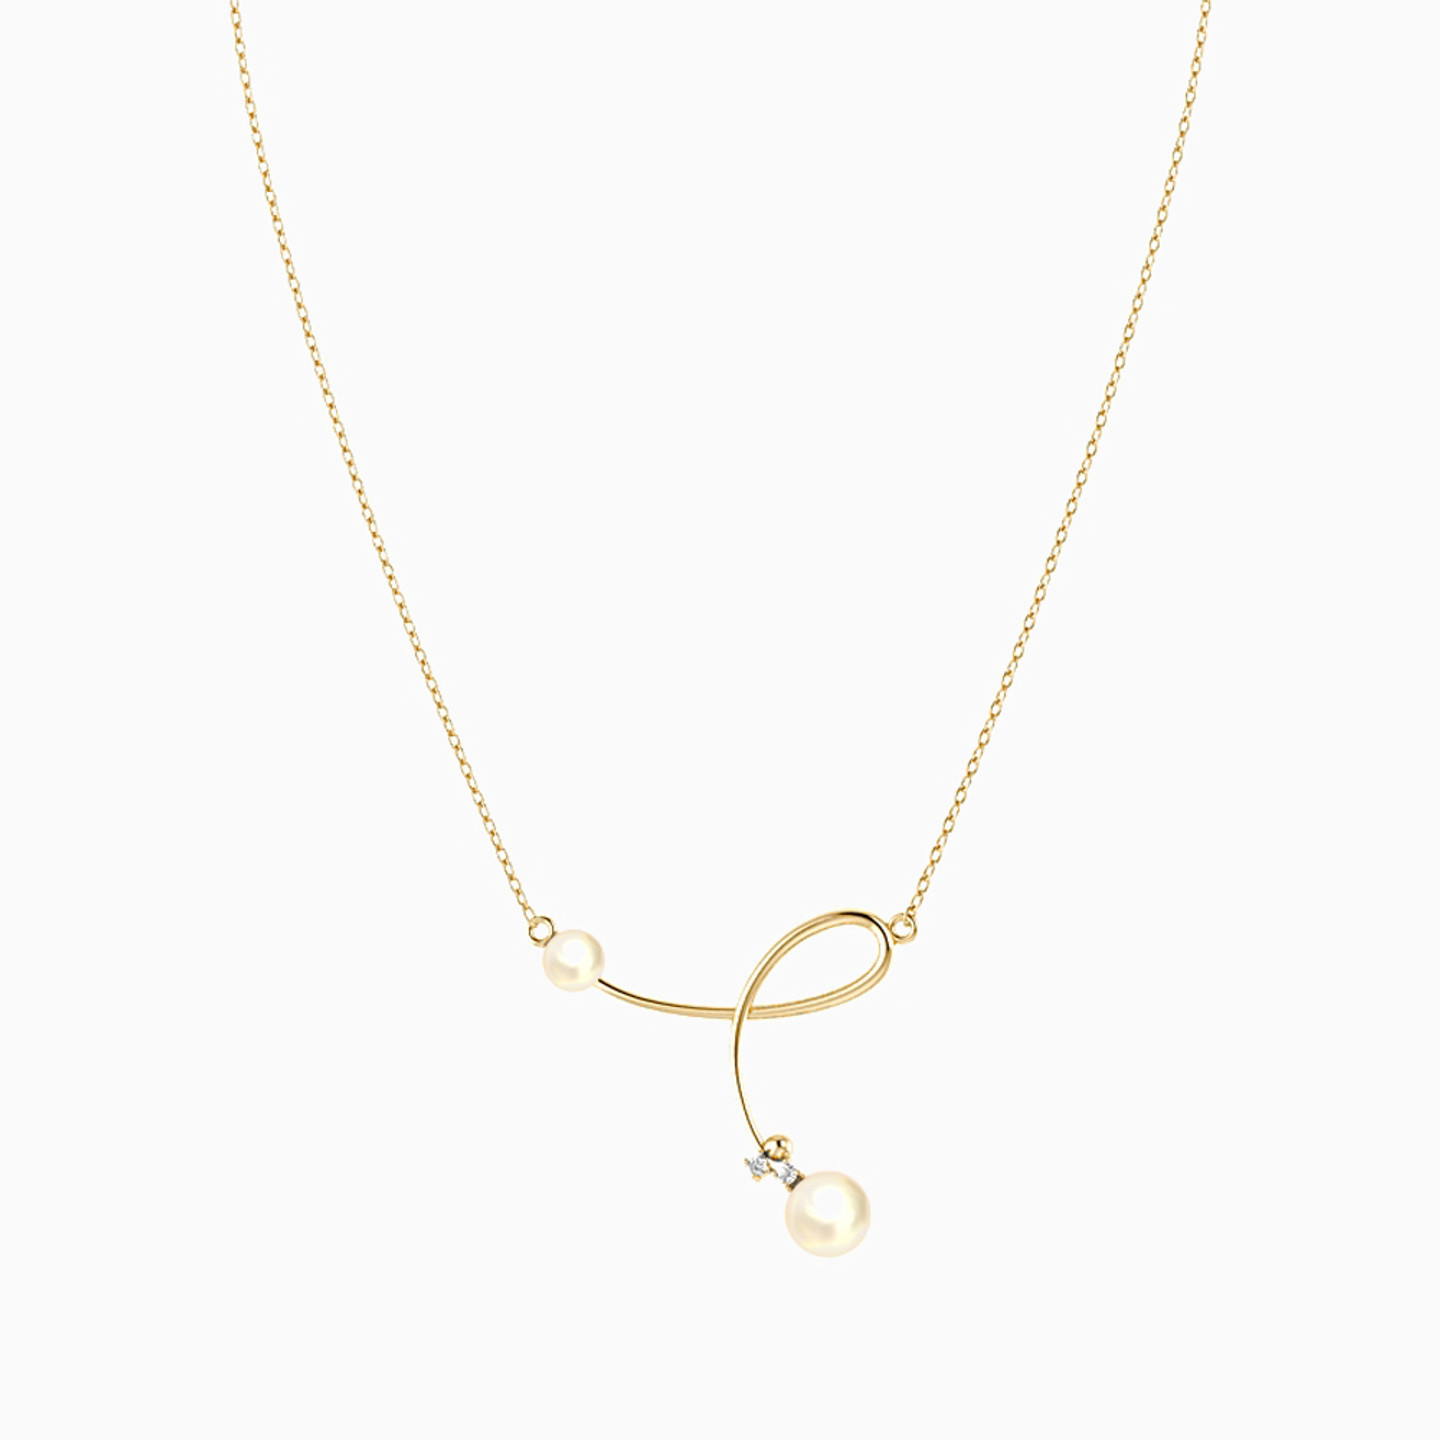 18K Gold Diamond & Pearls Pendant Necklace - 2